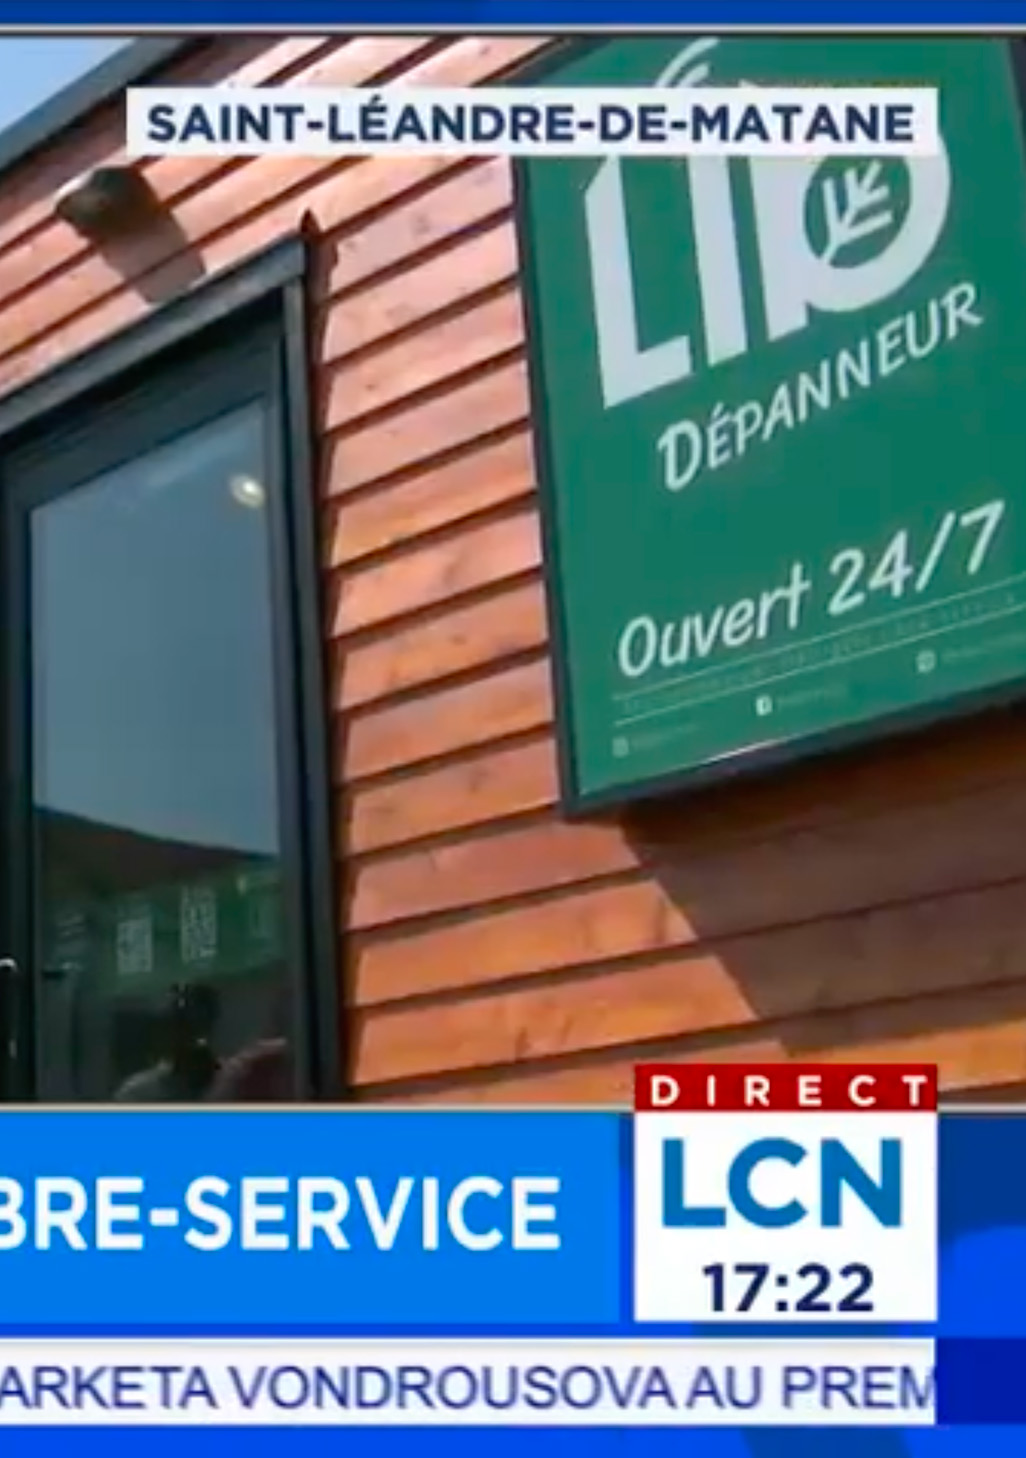 LCN Reportage LIB Dépanneur